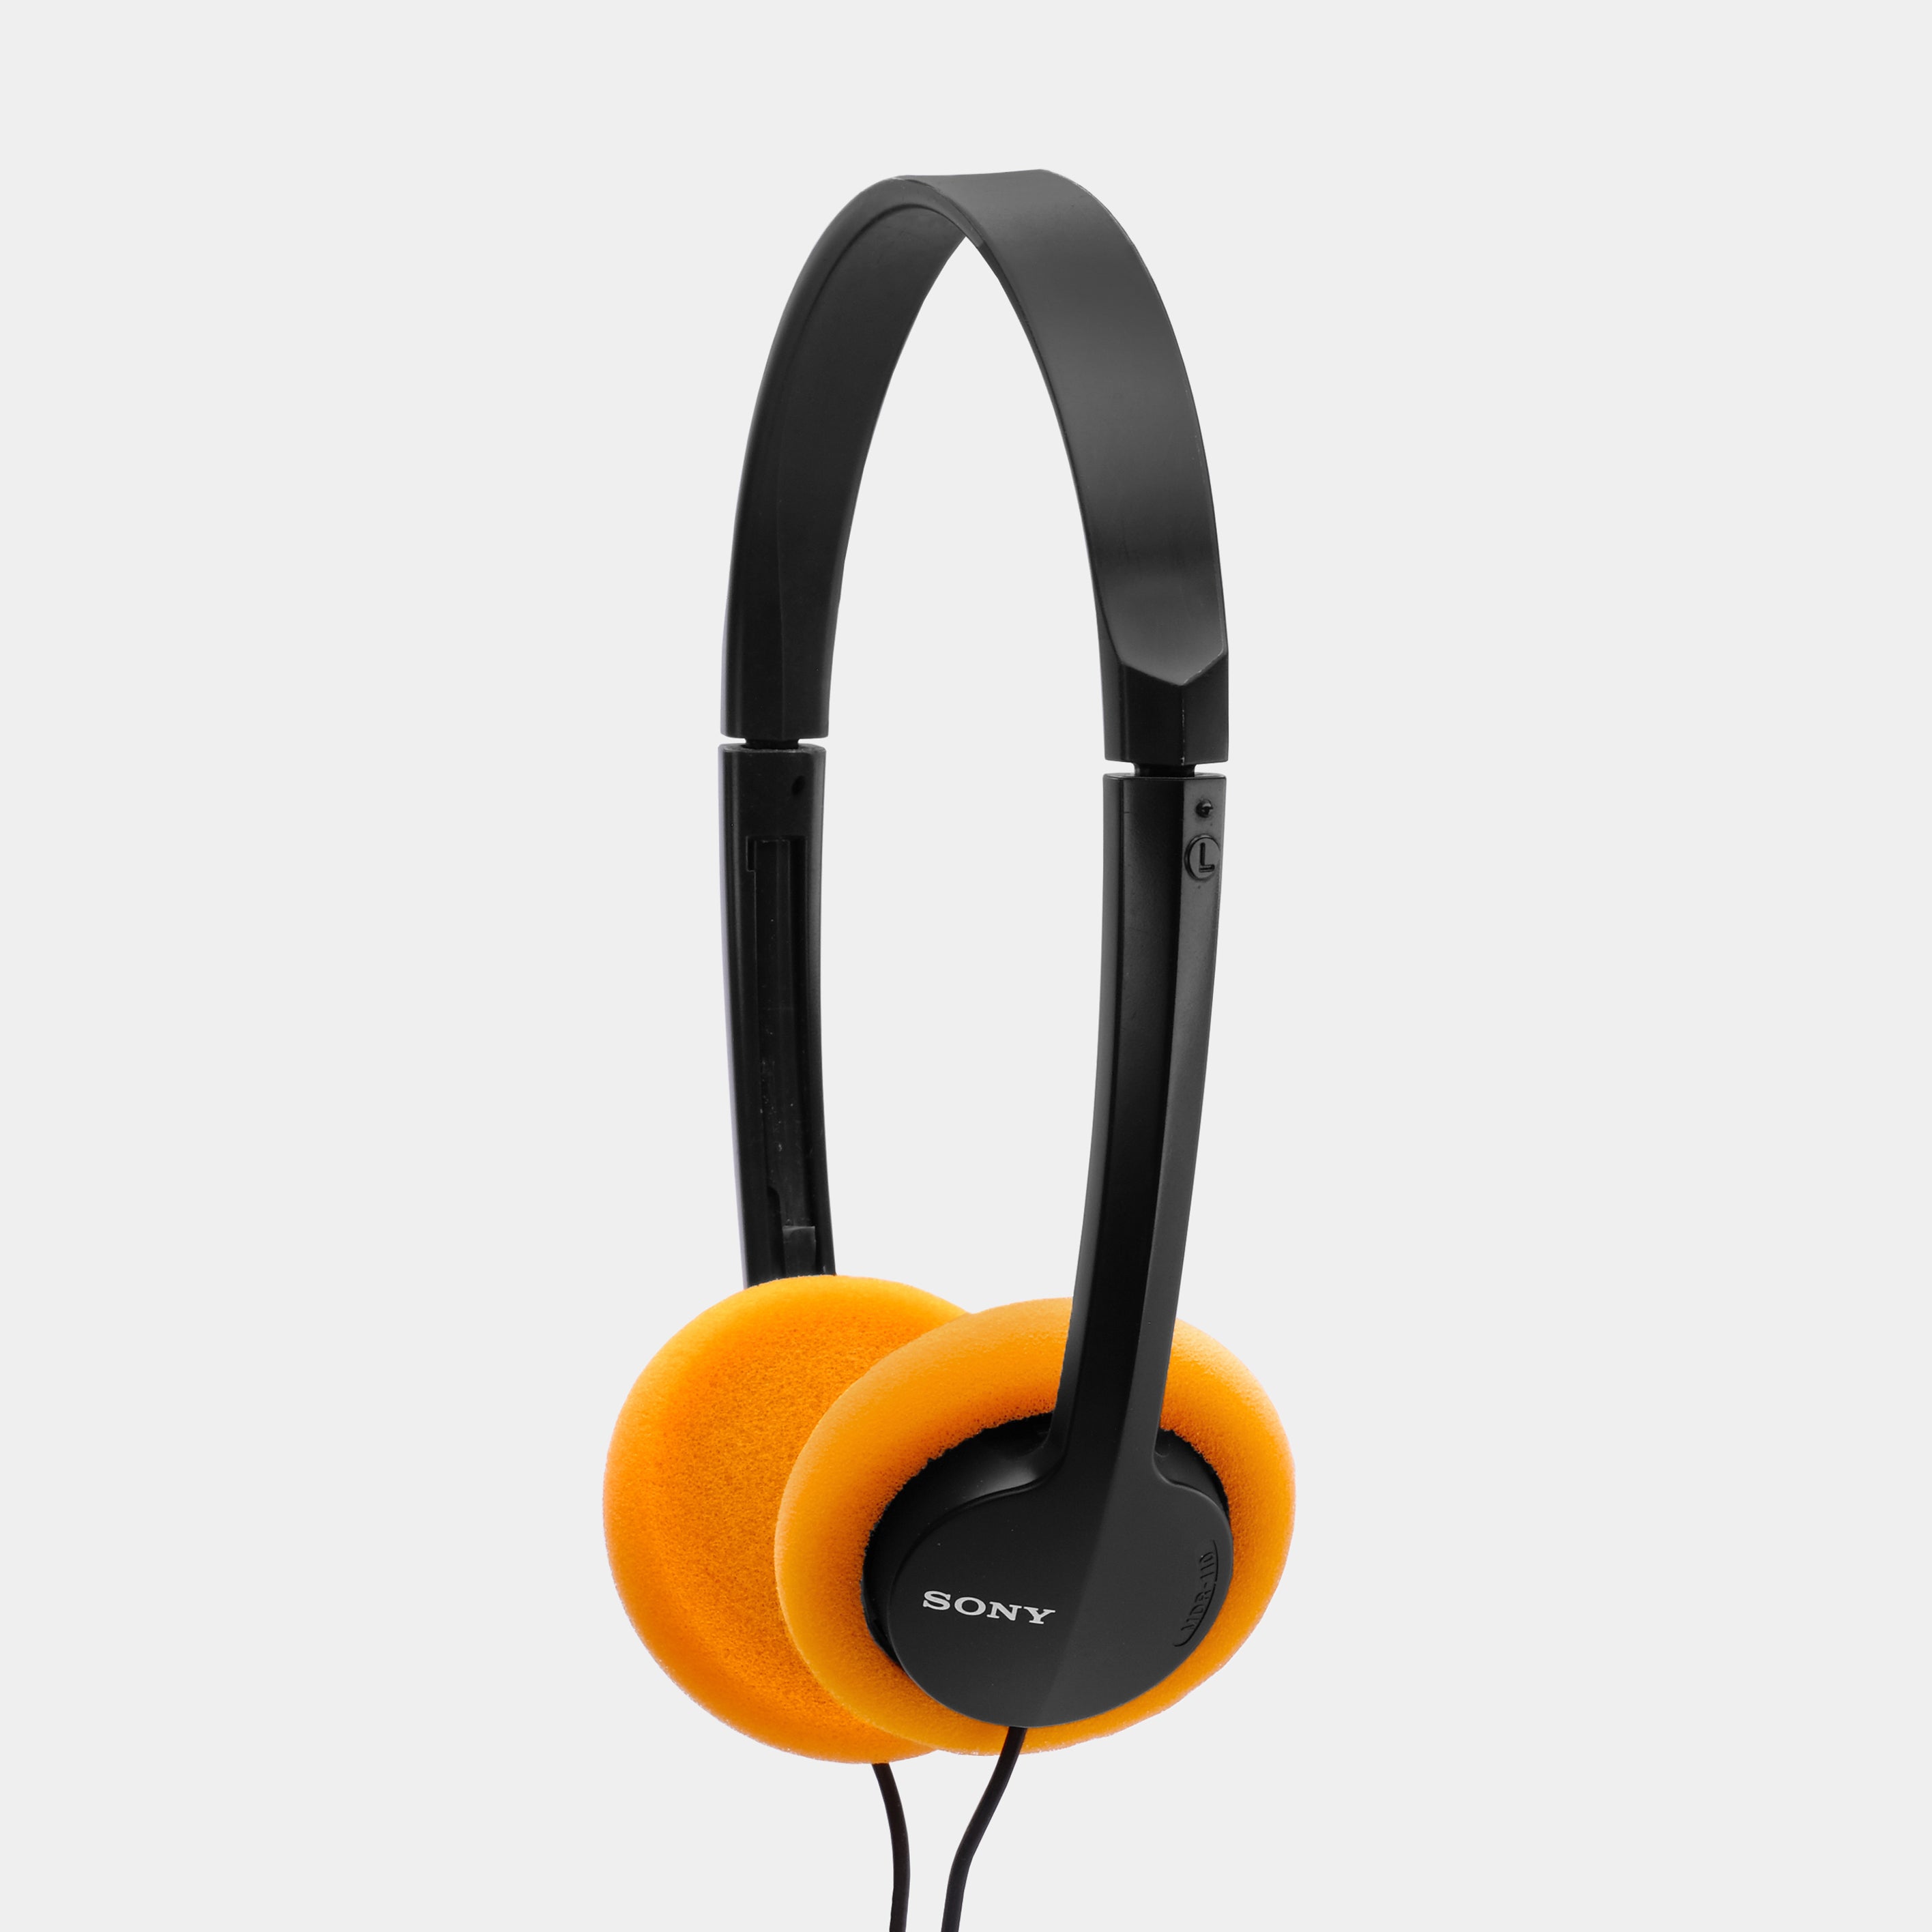 Sony MDR-110 On-Ear Headphones